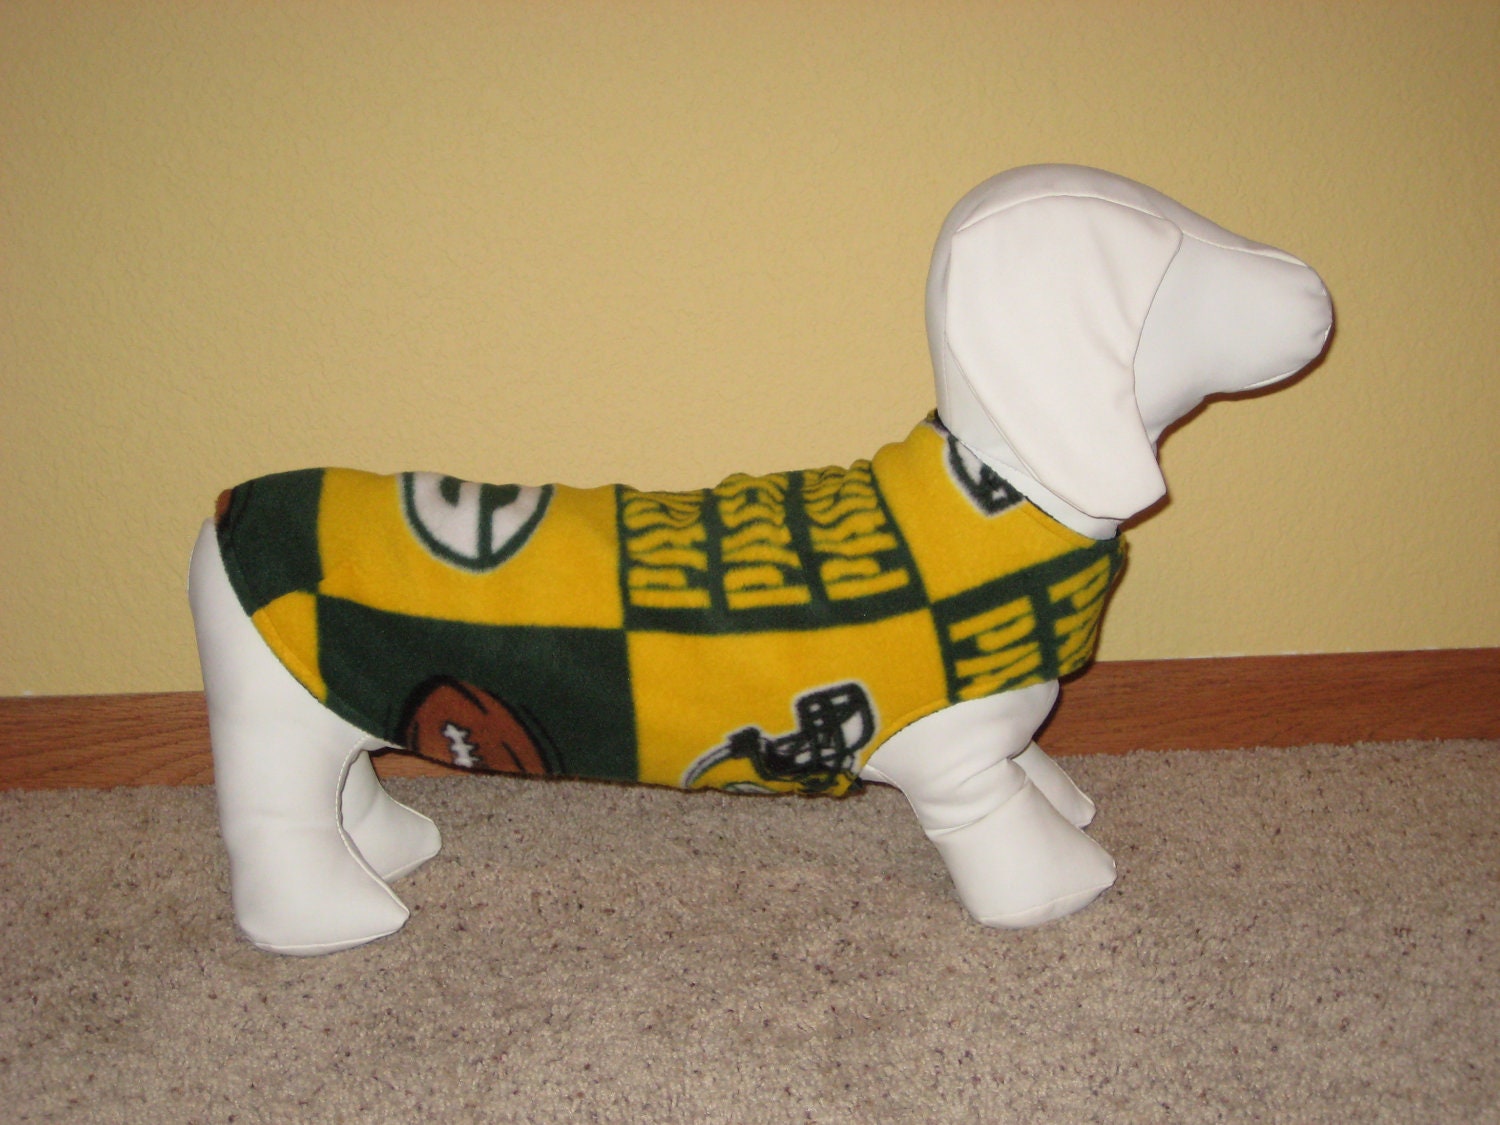 TWEENIE SIZE Dachshund Coat Green Bay Packers by wienerwraps